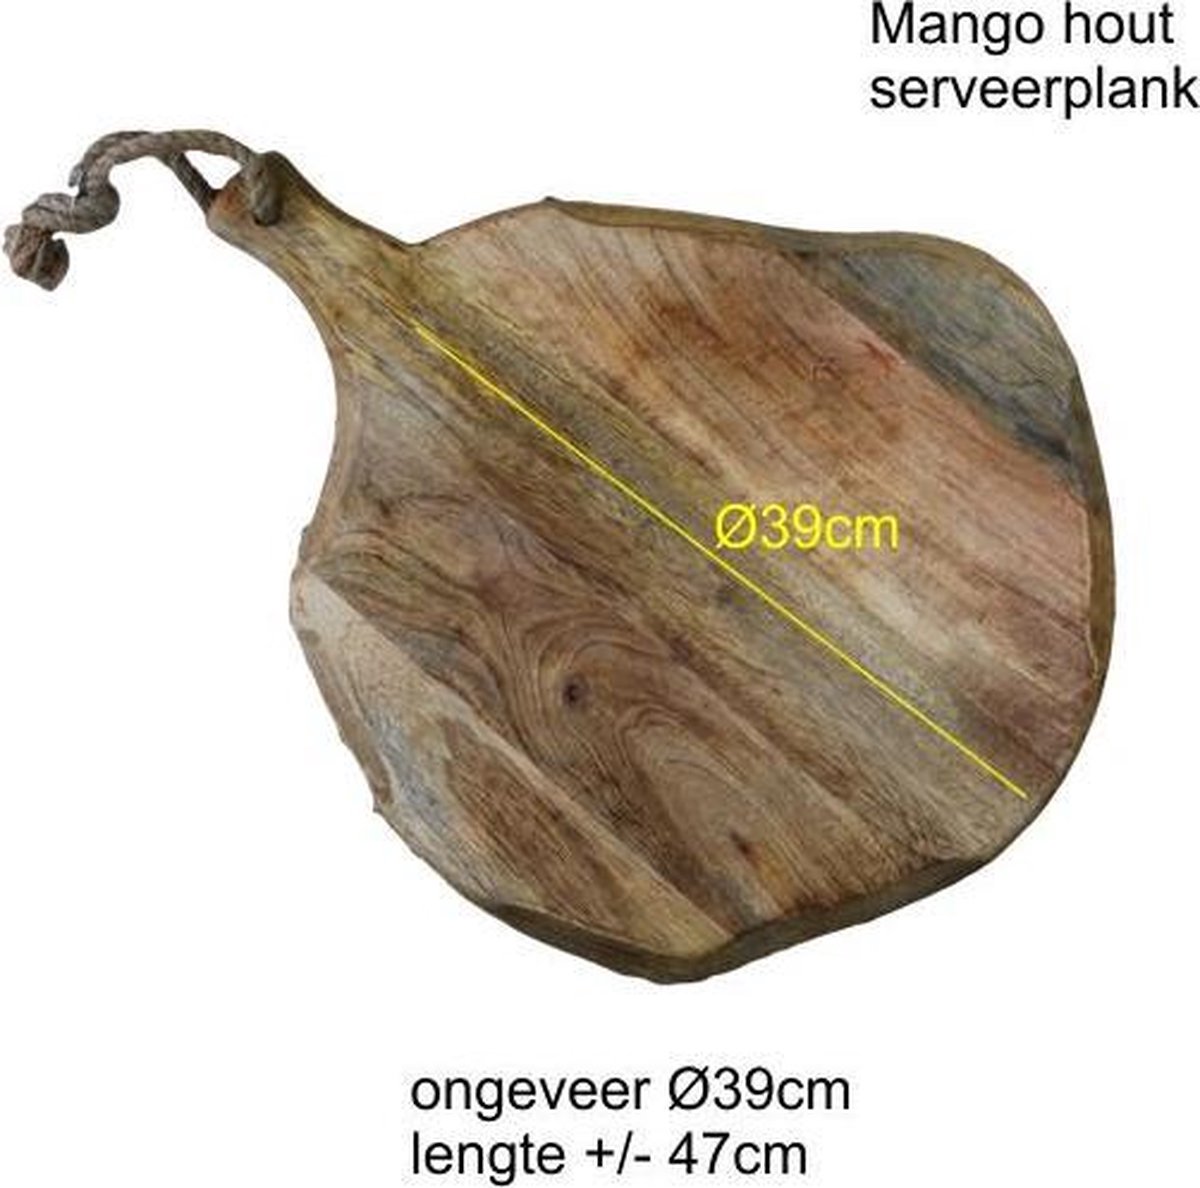 Serveerplank hout rond Ø39cm / 47cm lengte- Tapasplank mango hout met stoer touw - Borrelplank rond - hapjesplank